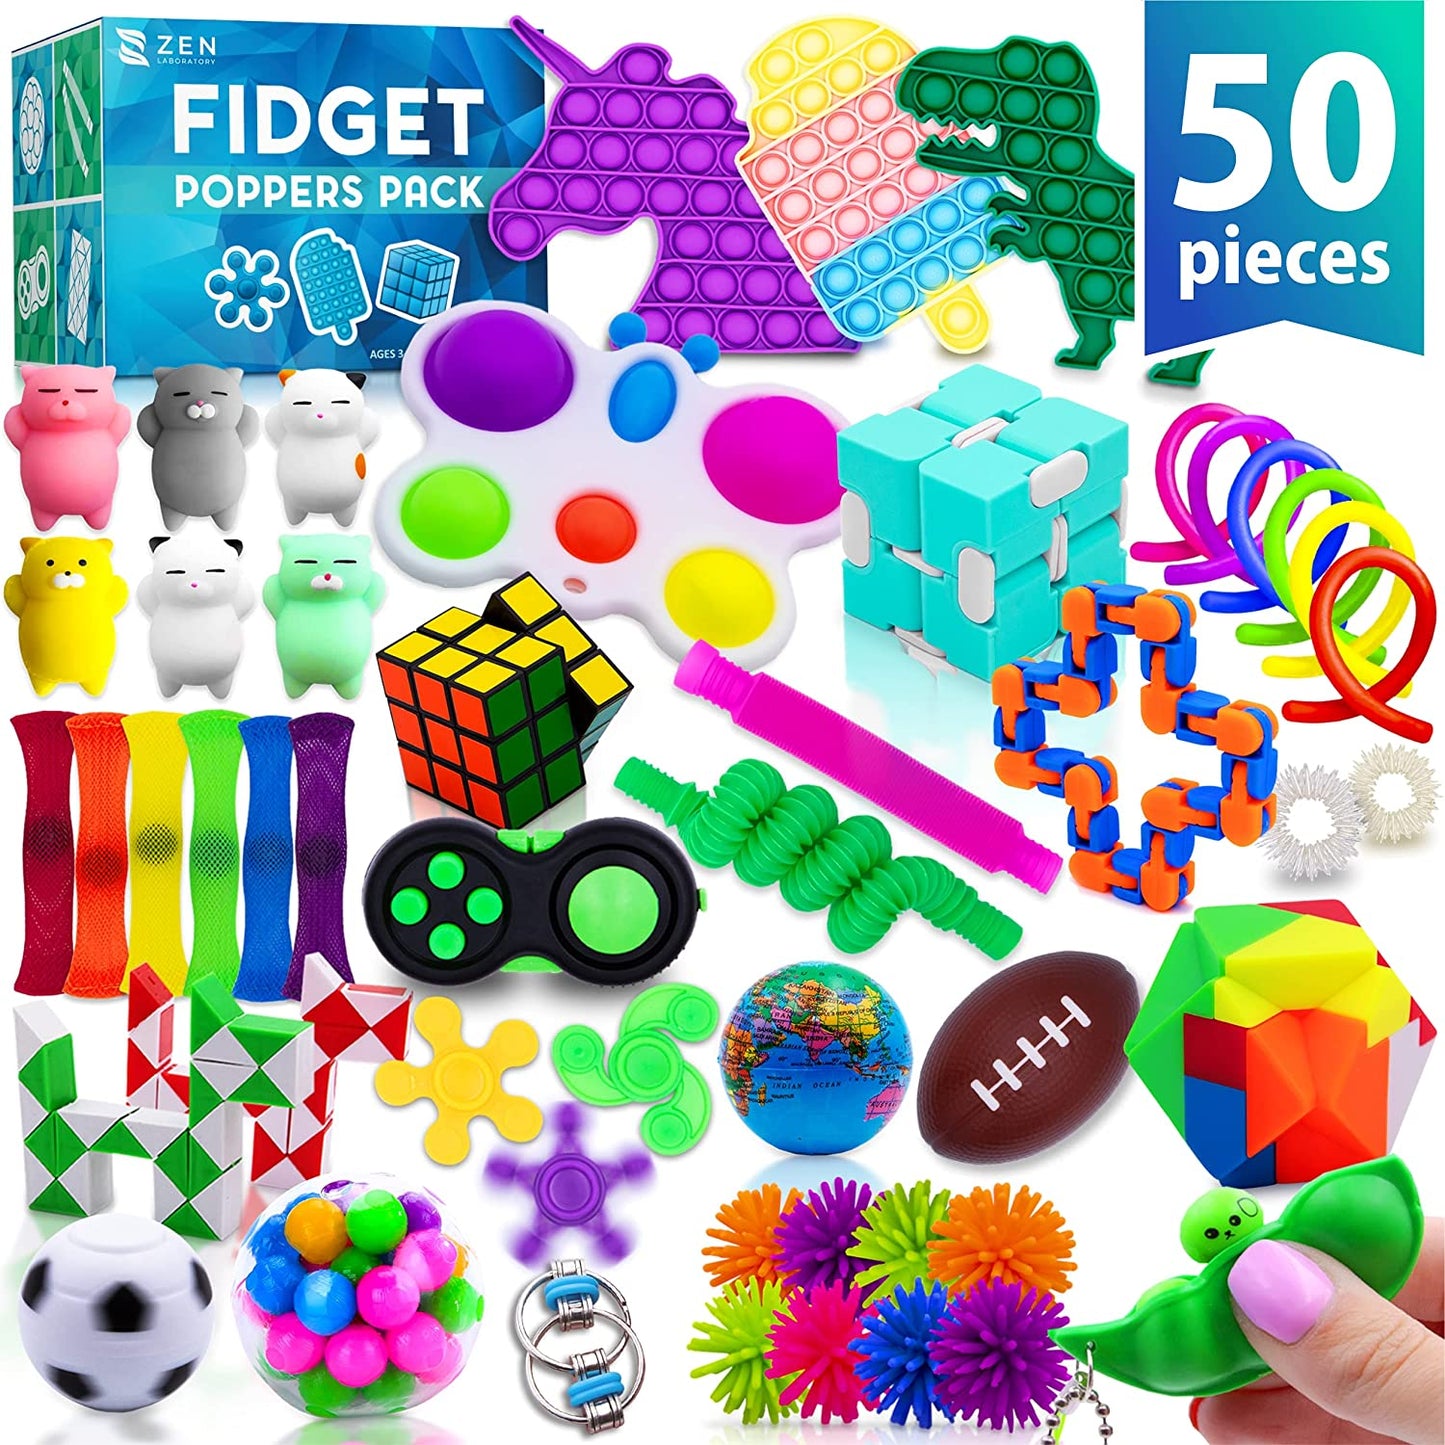 50 Pcs Fidget Pack - Party Favors Gifts for Kids, Adults & Autistics - Stress Relief Autism Sensory Toy - Fidget Toys Bulk for Classroom Treasure Box Prizes - Pop Its Fidgets Stocking Stuffers